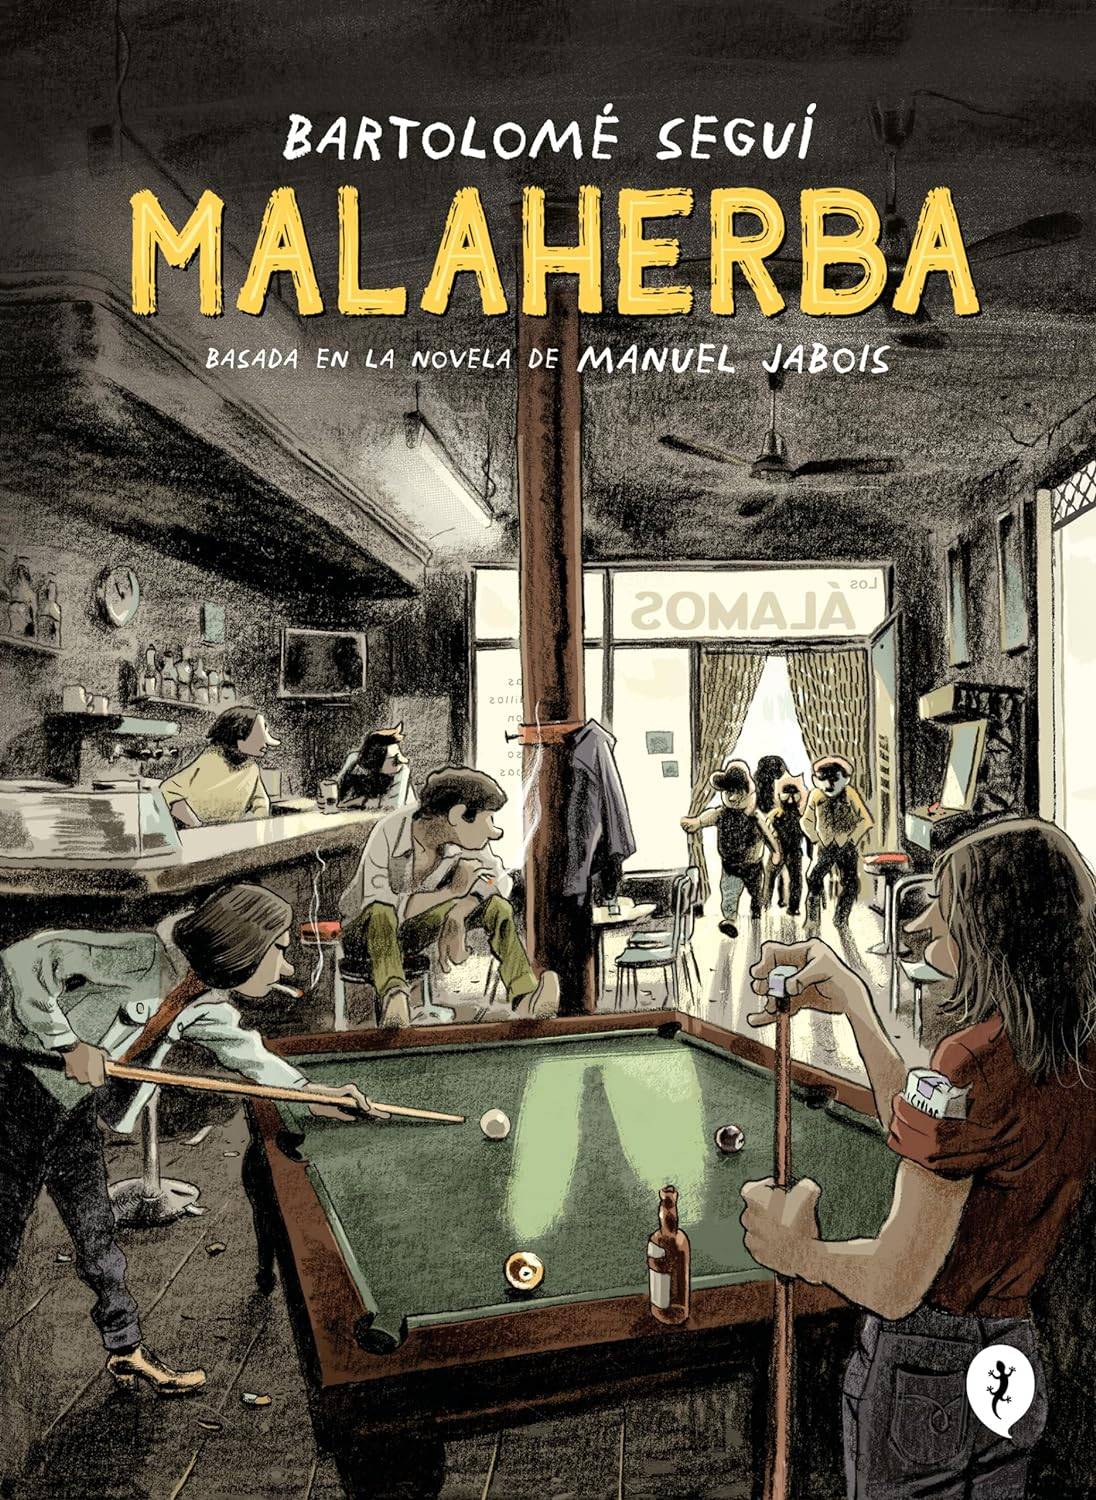 Malaherba: el cómic de Bartolomé Seguí que adapta la novela de Jabois